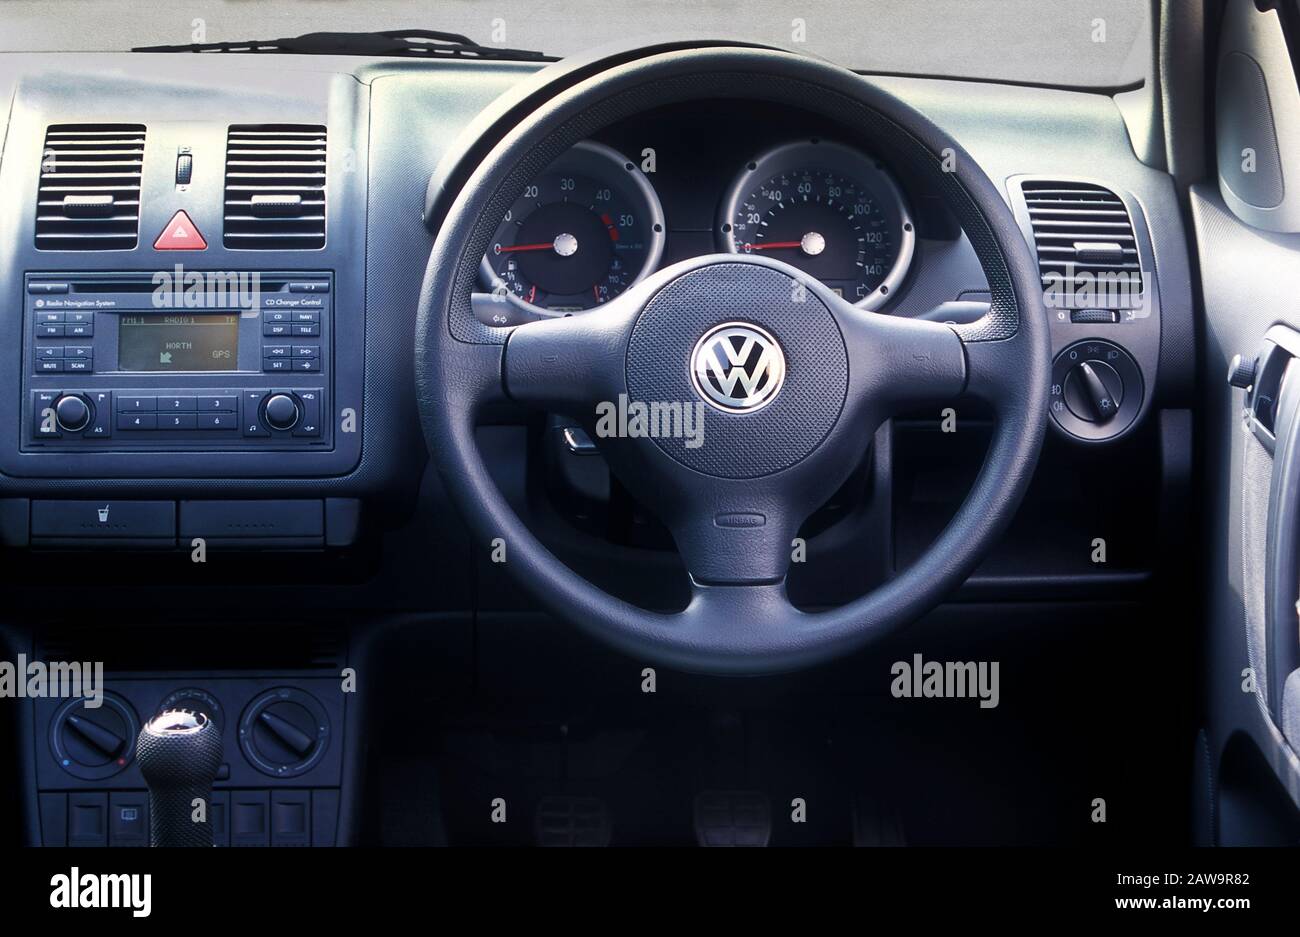 1999 VW Polo 1.4 TDi Stock Photo - Alamy